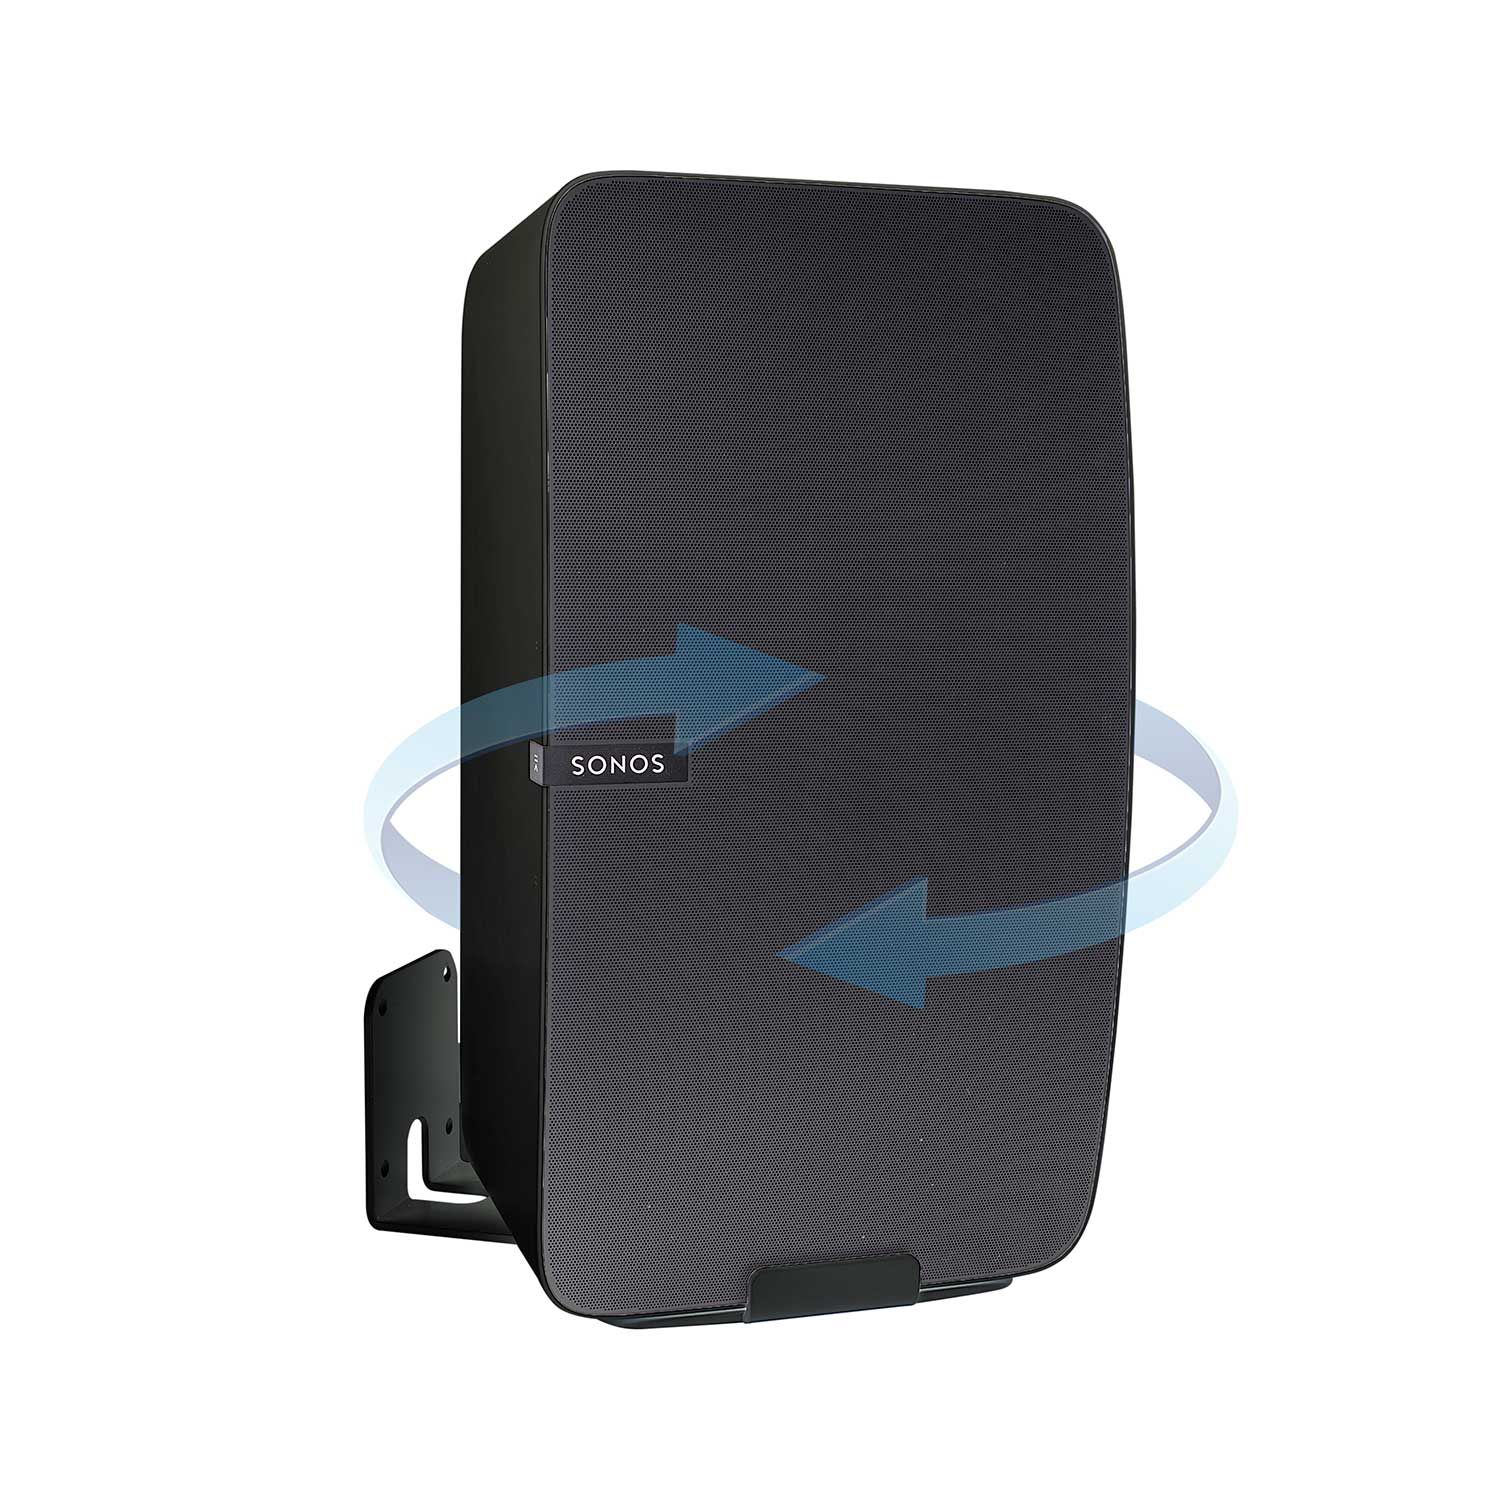 Necklet Settlers Invitere Vebos wall mount Sonos Play 5 gen 2 rotatable black- vertical